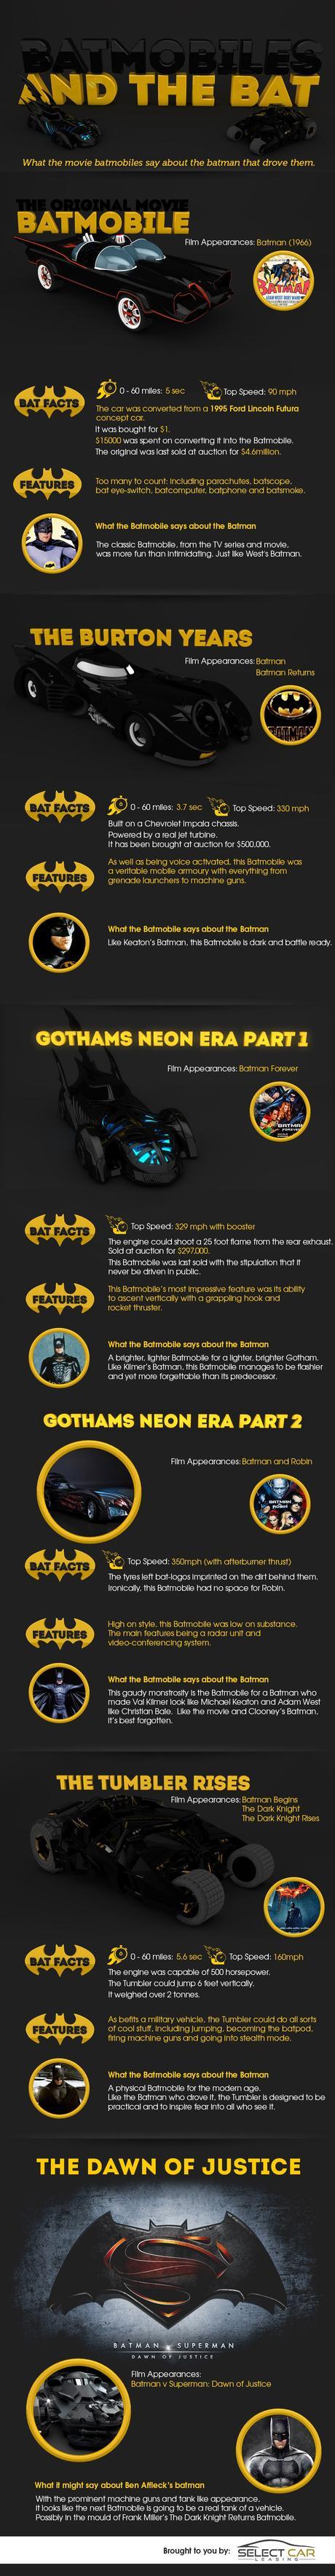 batmobile-evolution-2016-infographic